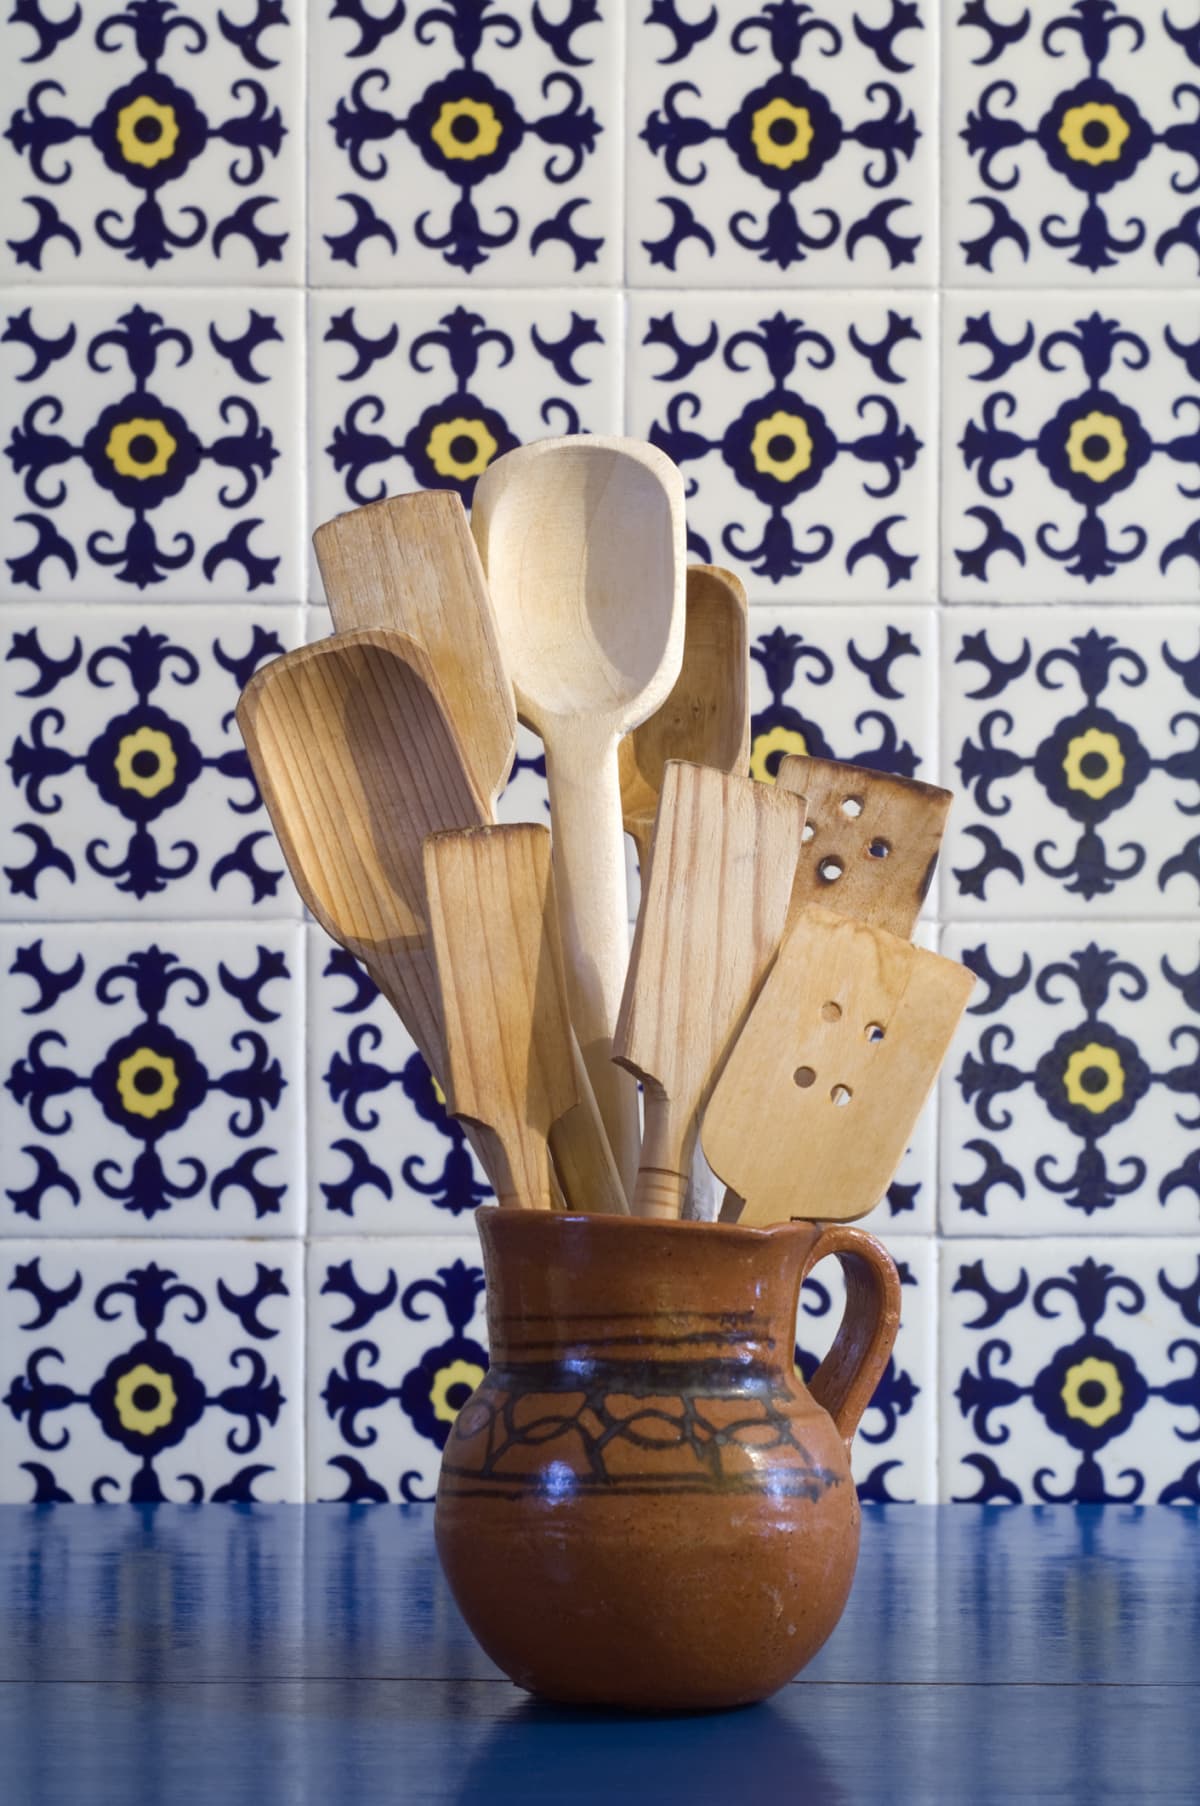 Wooden utensils in front of patterned tile